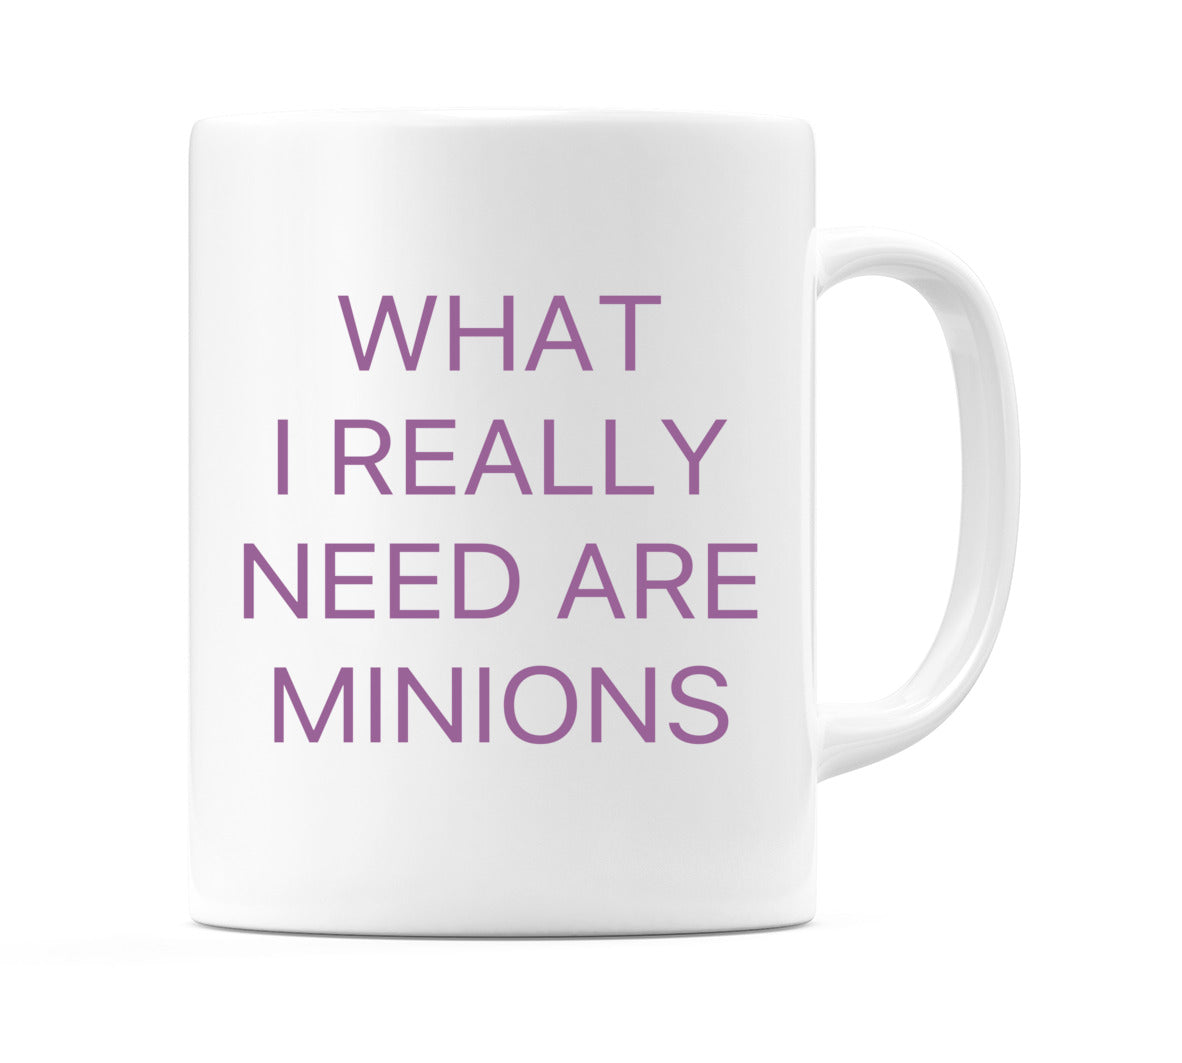 What I Really Need Are Minions Mug